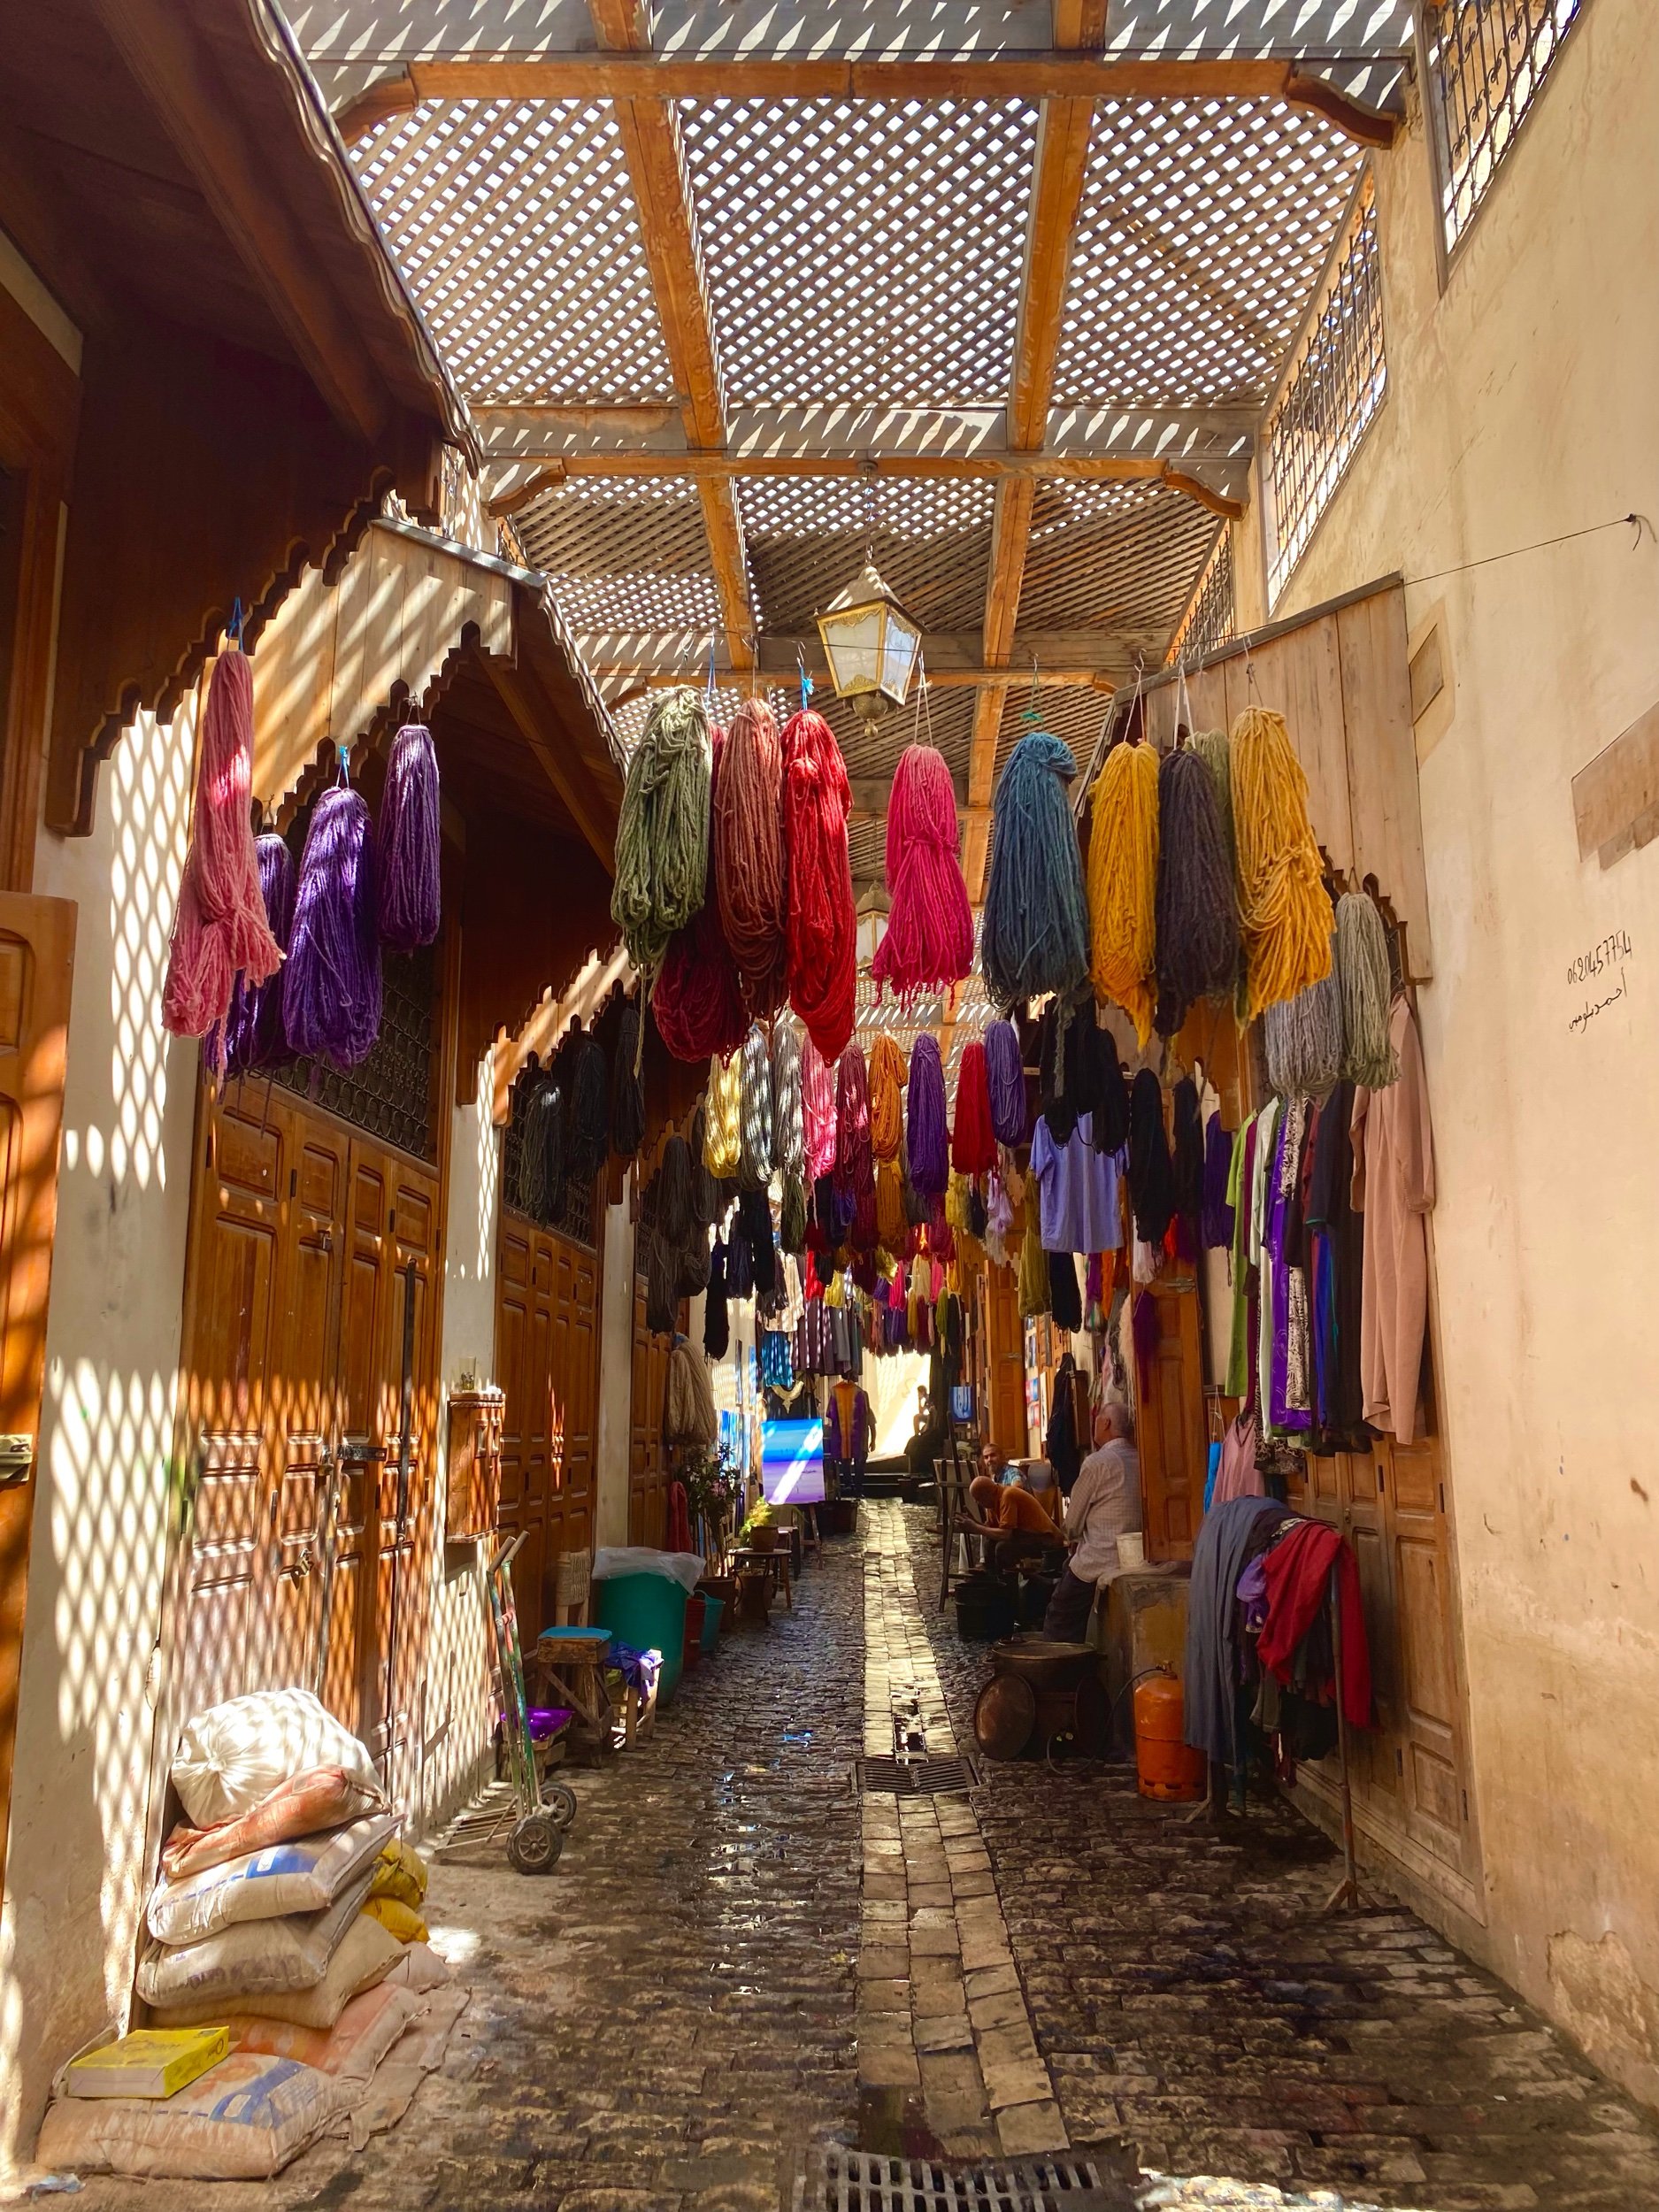  Dyer street in fez medina 